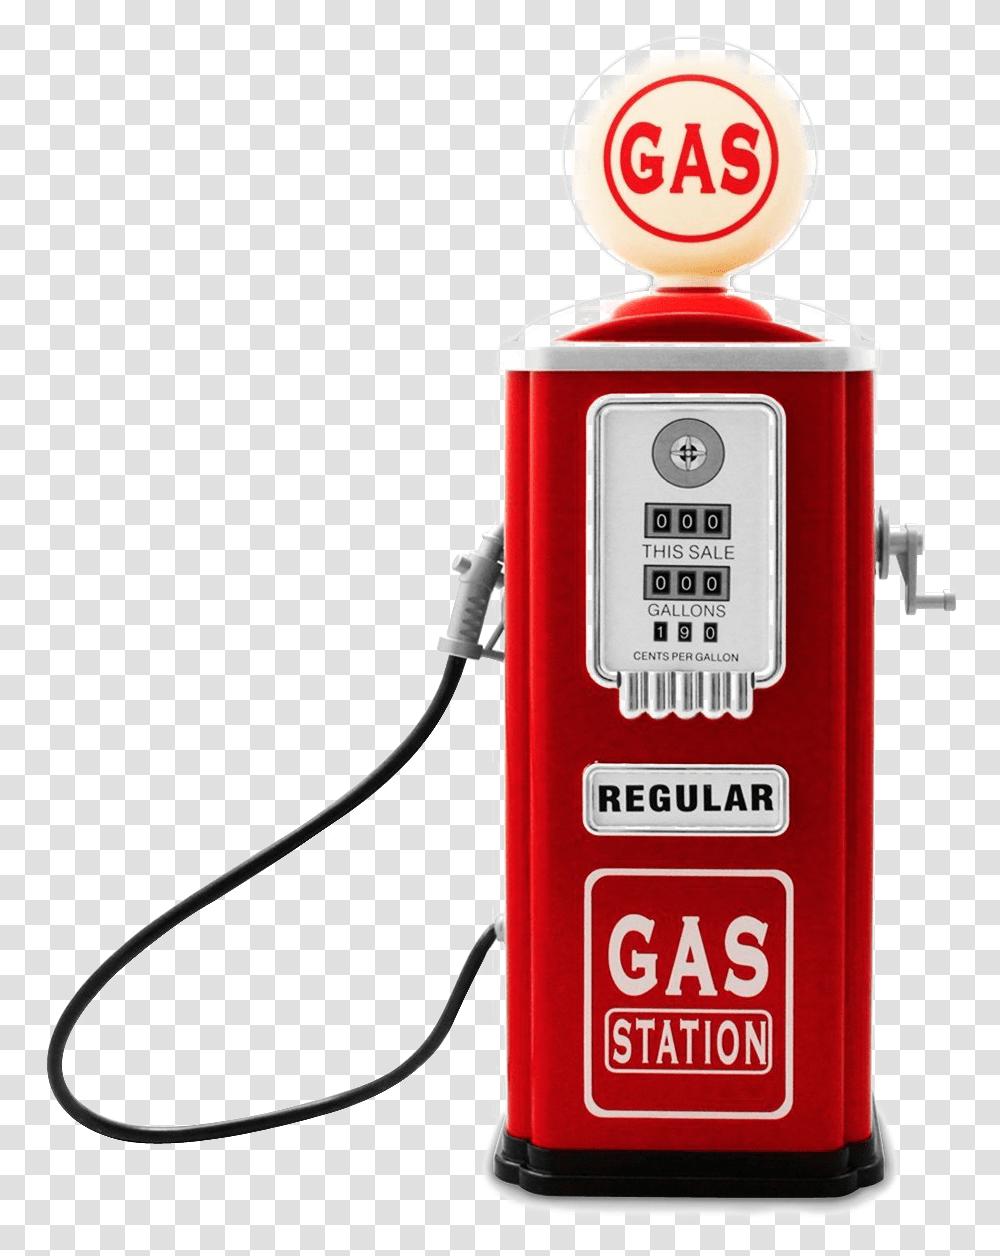 Petrol Pump Hose Background Image Baghera Gas Station, Machine, Gas Pump Transparent Png